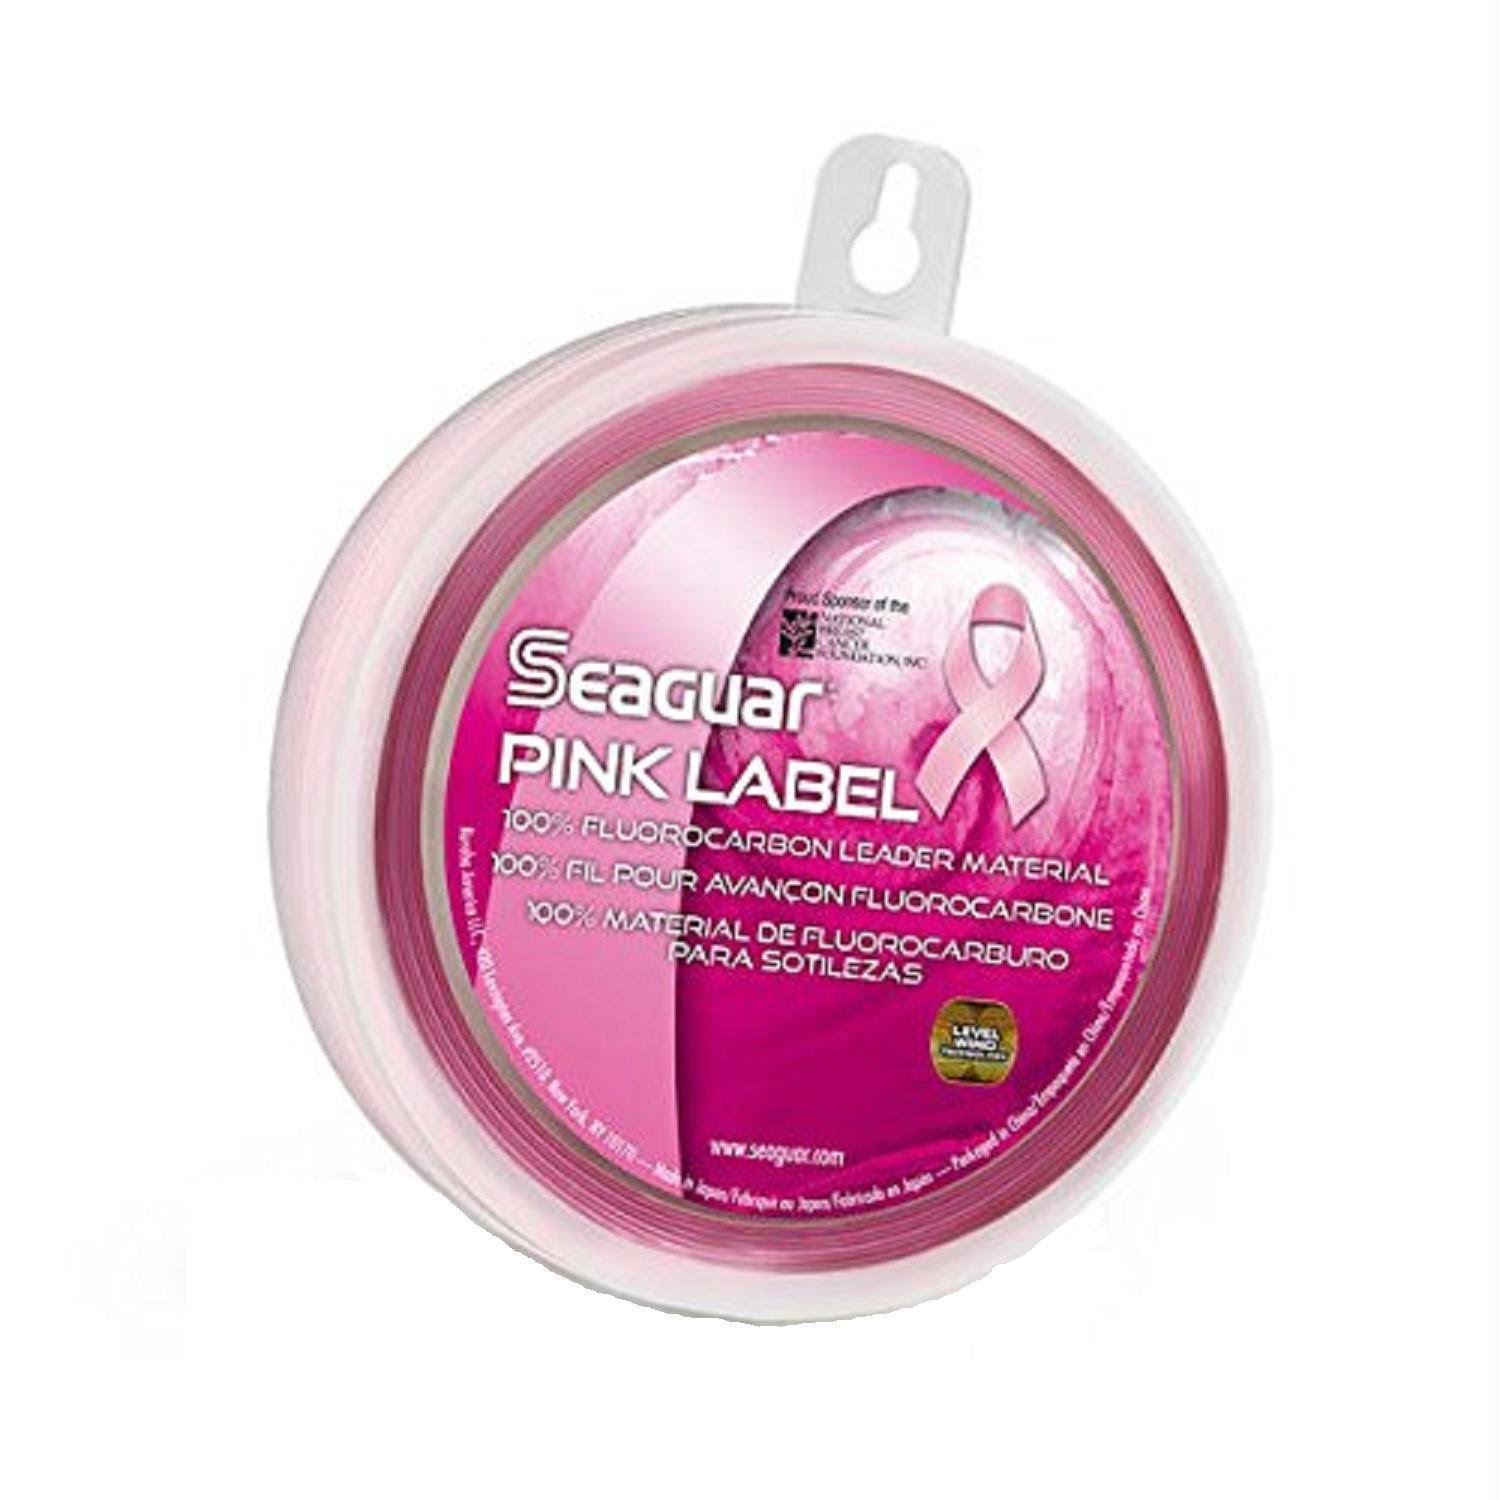 Seaguar Fluorocarbon Line - Pink, 60lbs, 25yds